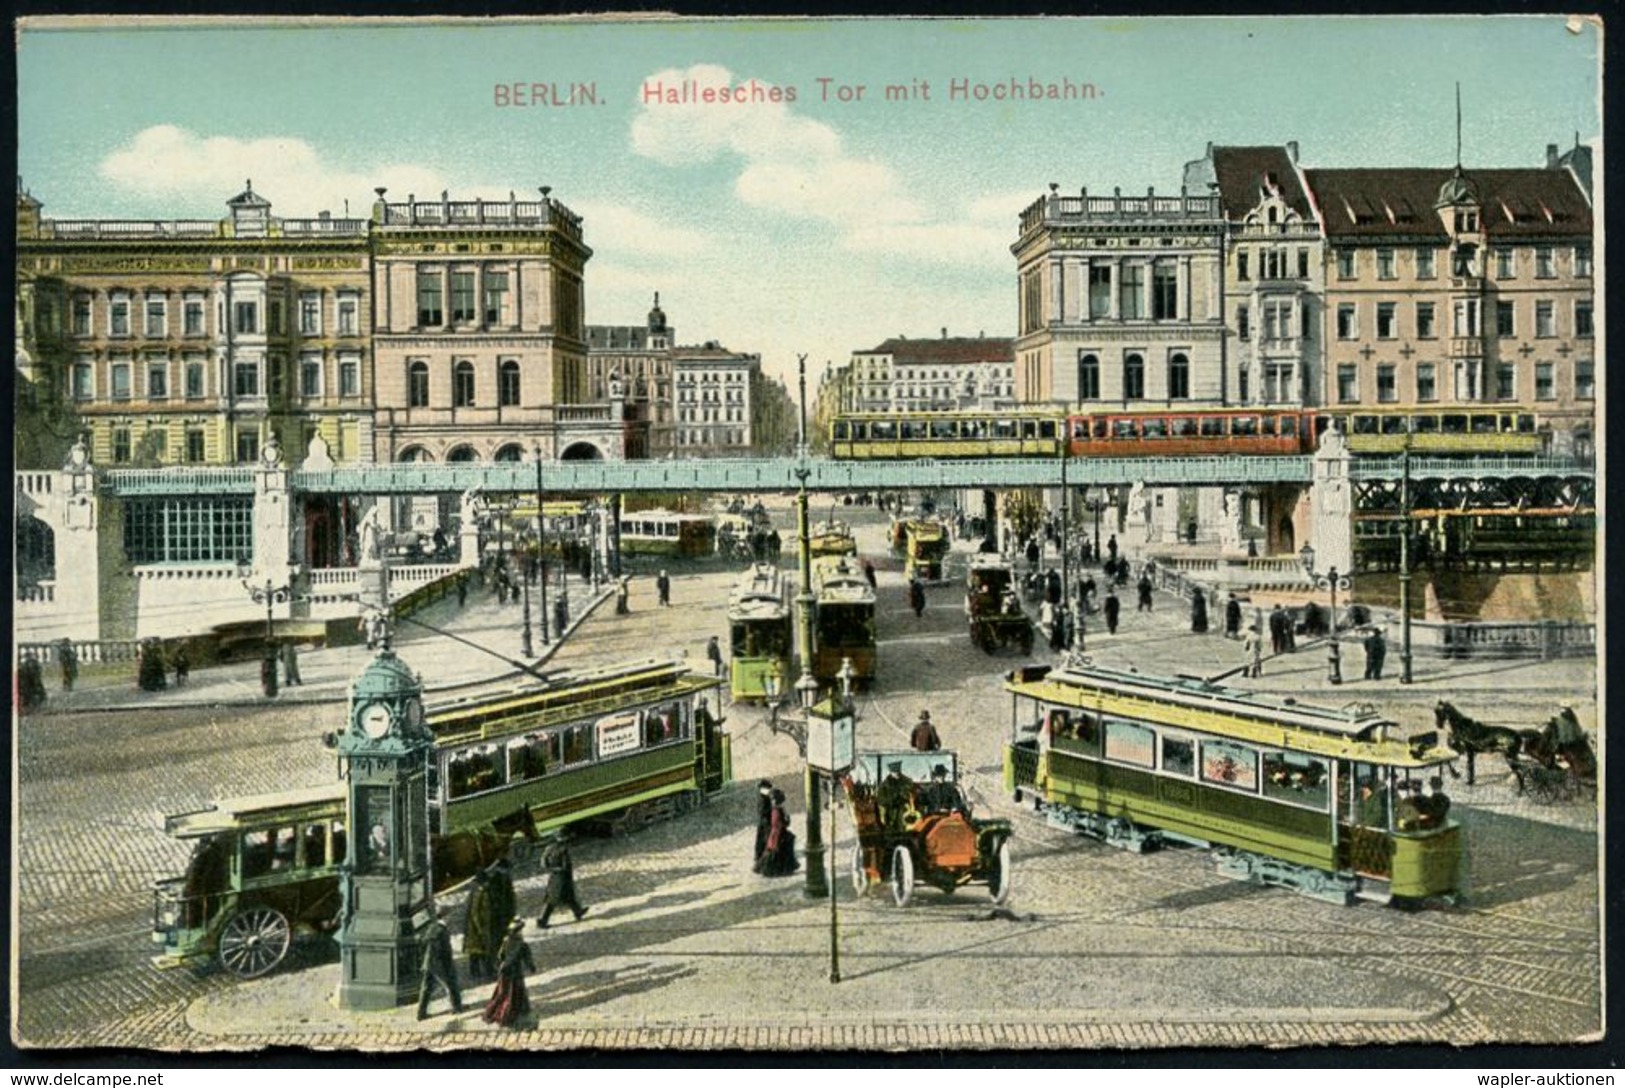 UNTERGRUNDBAHN /U-BAHN : Berlin-Kreuzberg 1908/20 U-Bahnhof Hallesches Tor, 9 verschiedene Color-Foto-Ak. , meist gebr.,